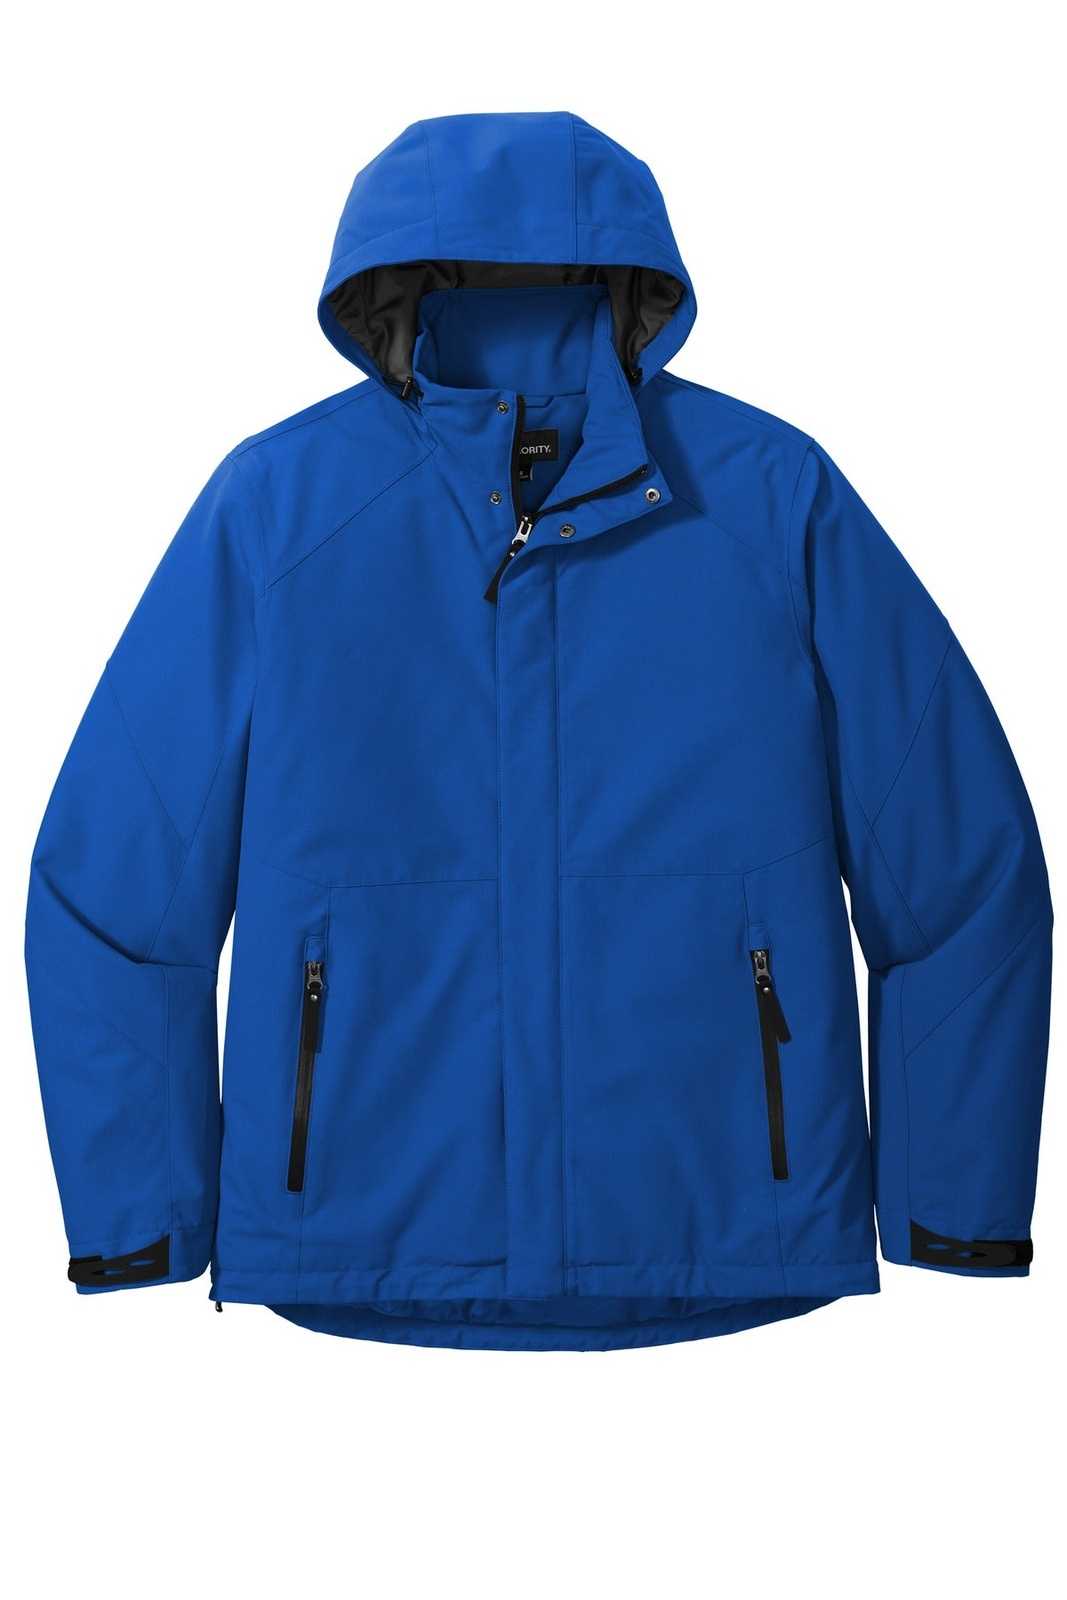 Port Authority J405 Insulated Waterproof Tech Jacket - Cobalt Blue - HIT a Double - 5